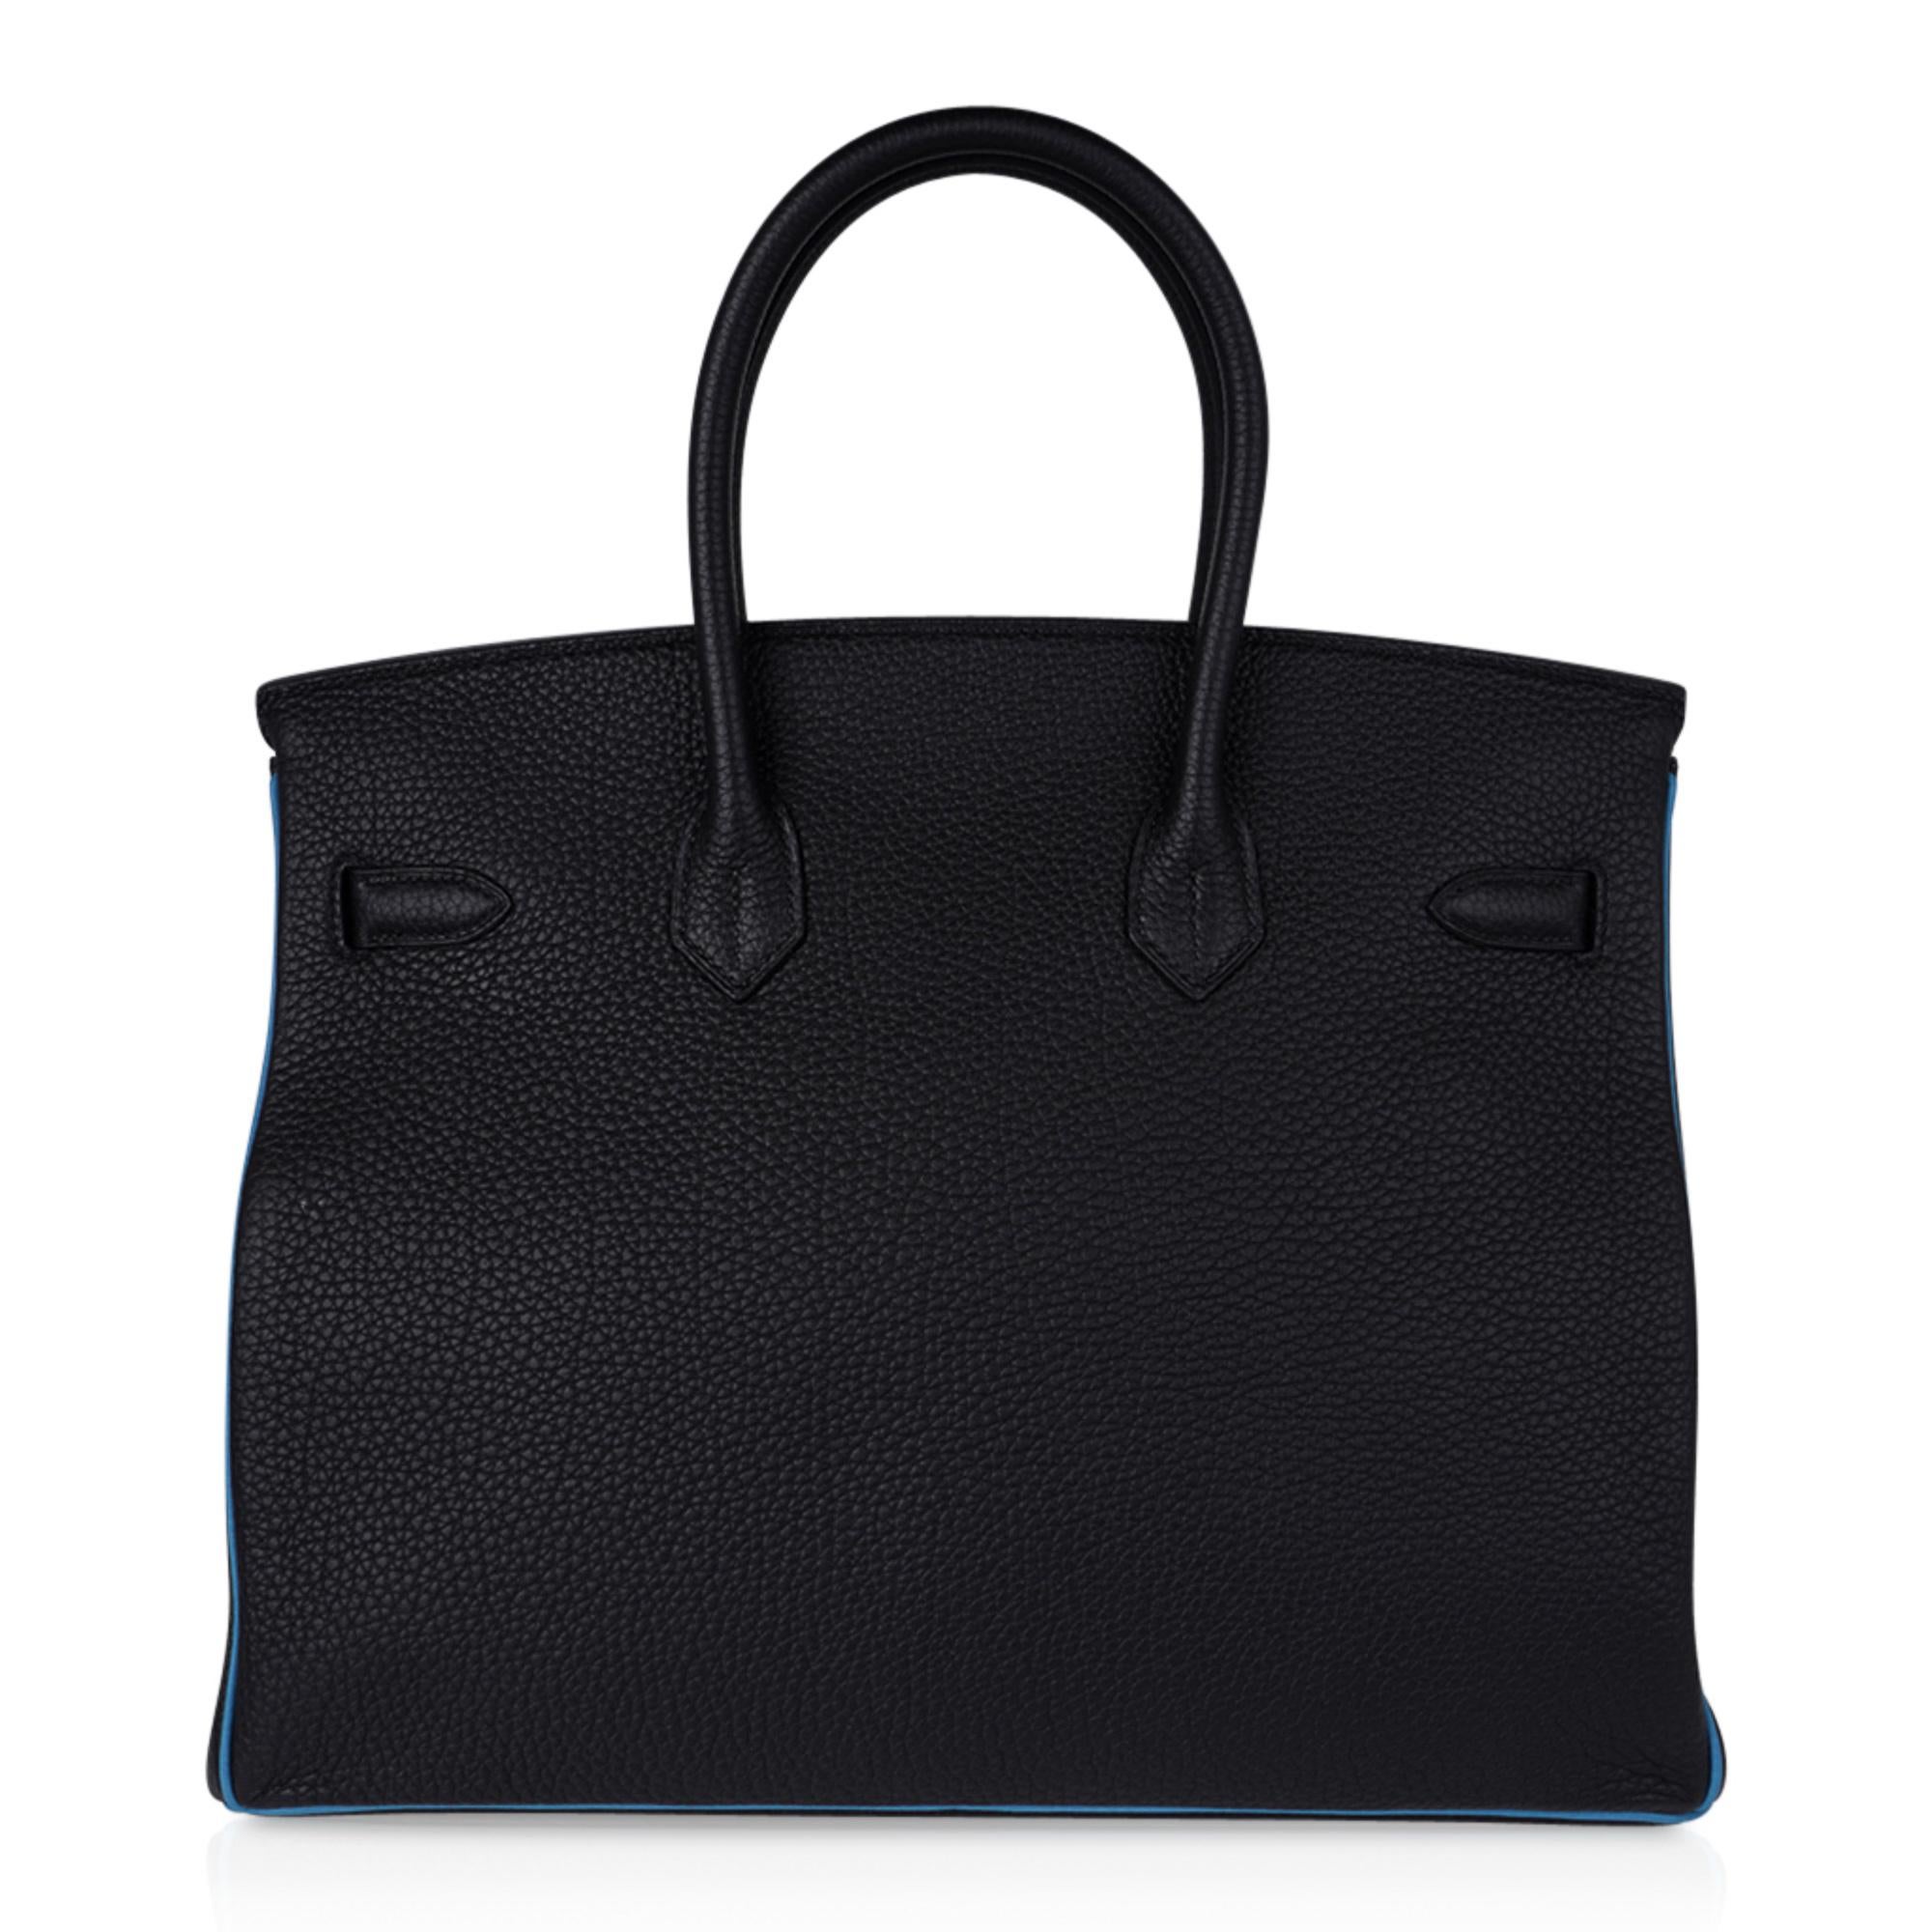 Hermes Birkin HSS 35 Black / Turquoise Bag Brushed Palladium Togo Leather For Sale 6